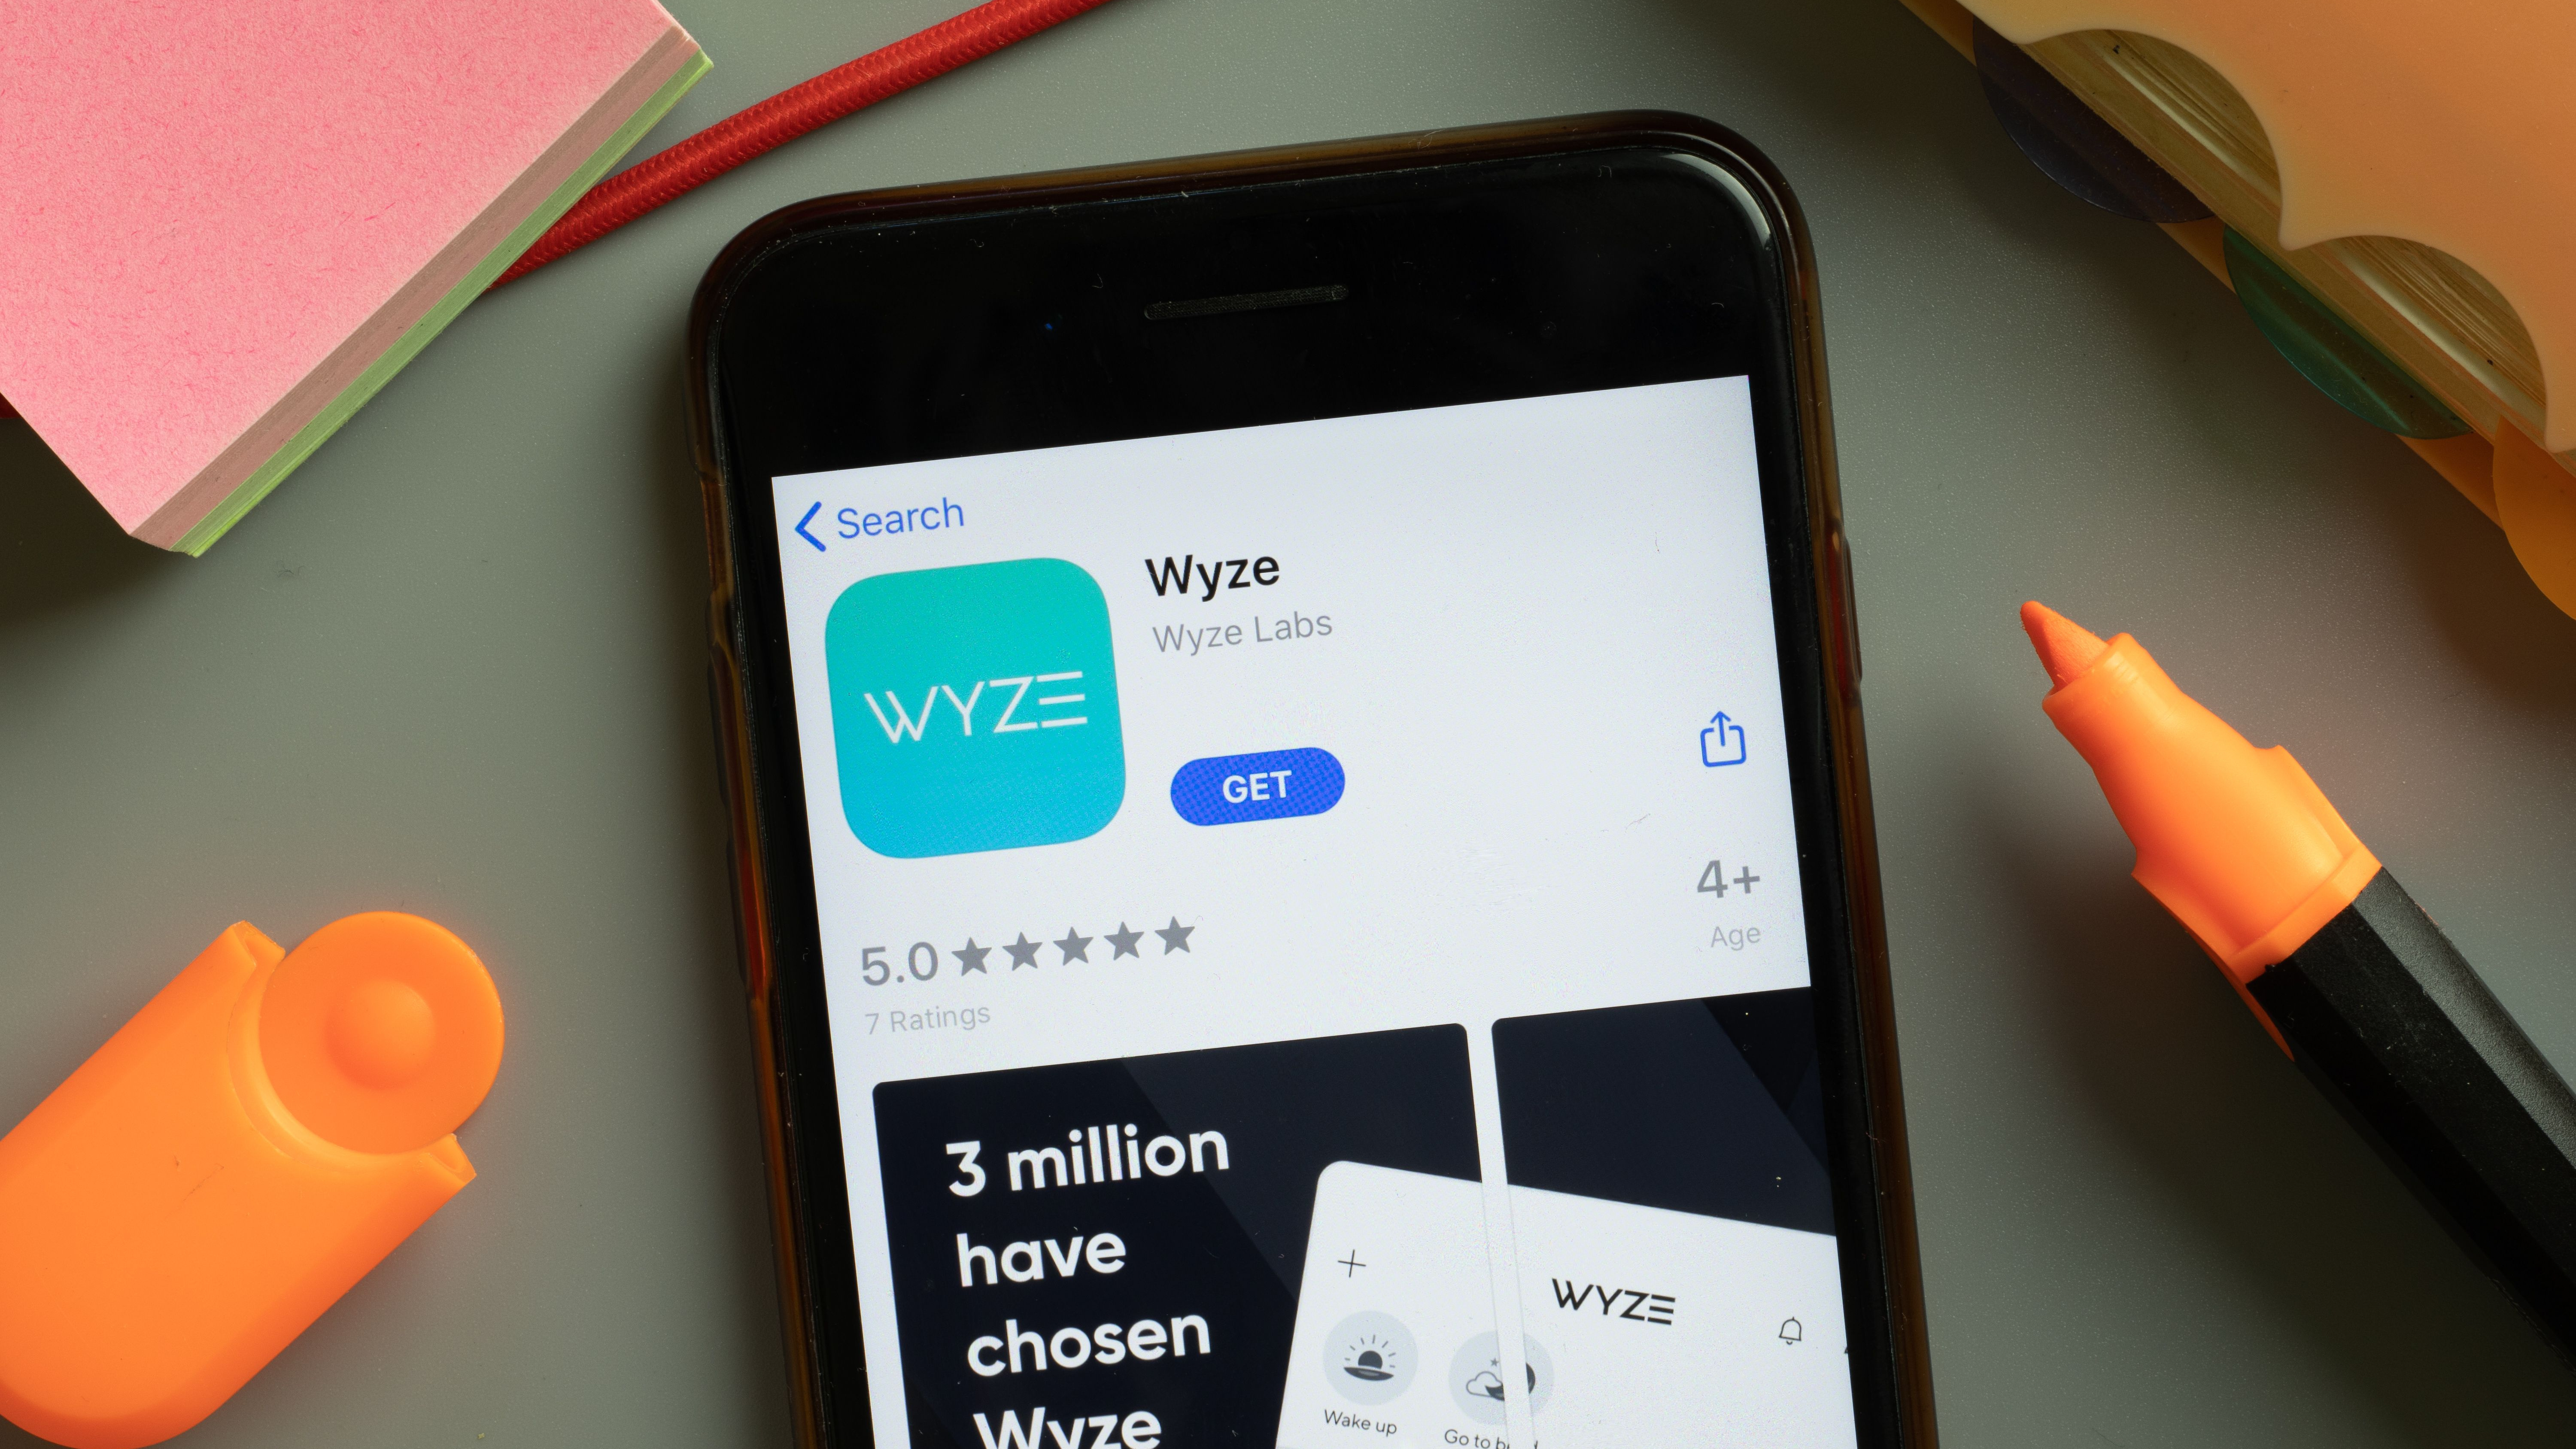 Wyze app running on a smartphone